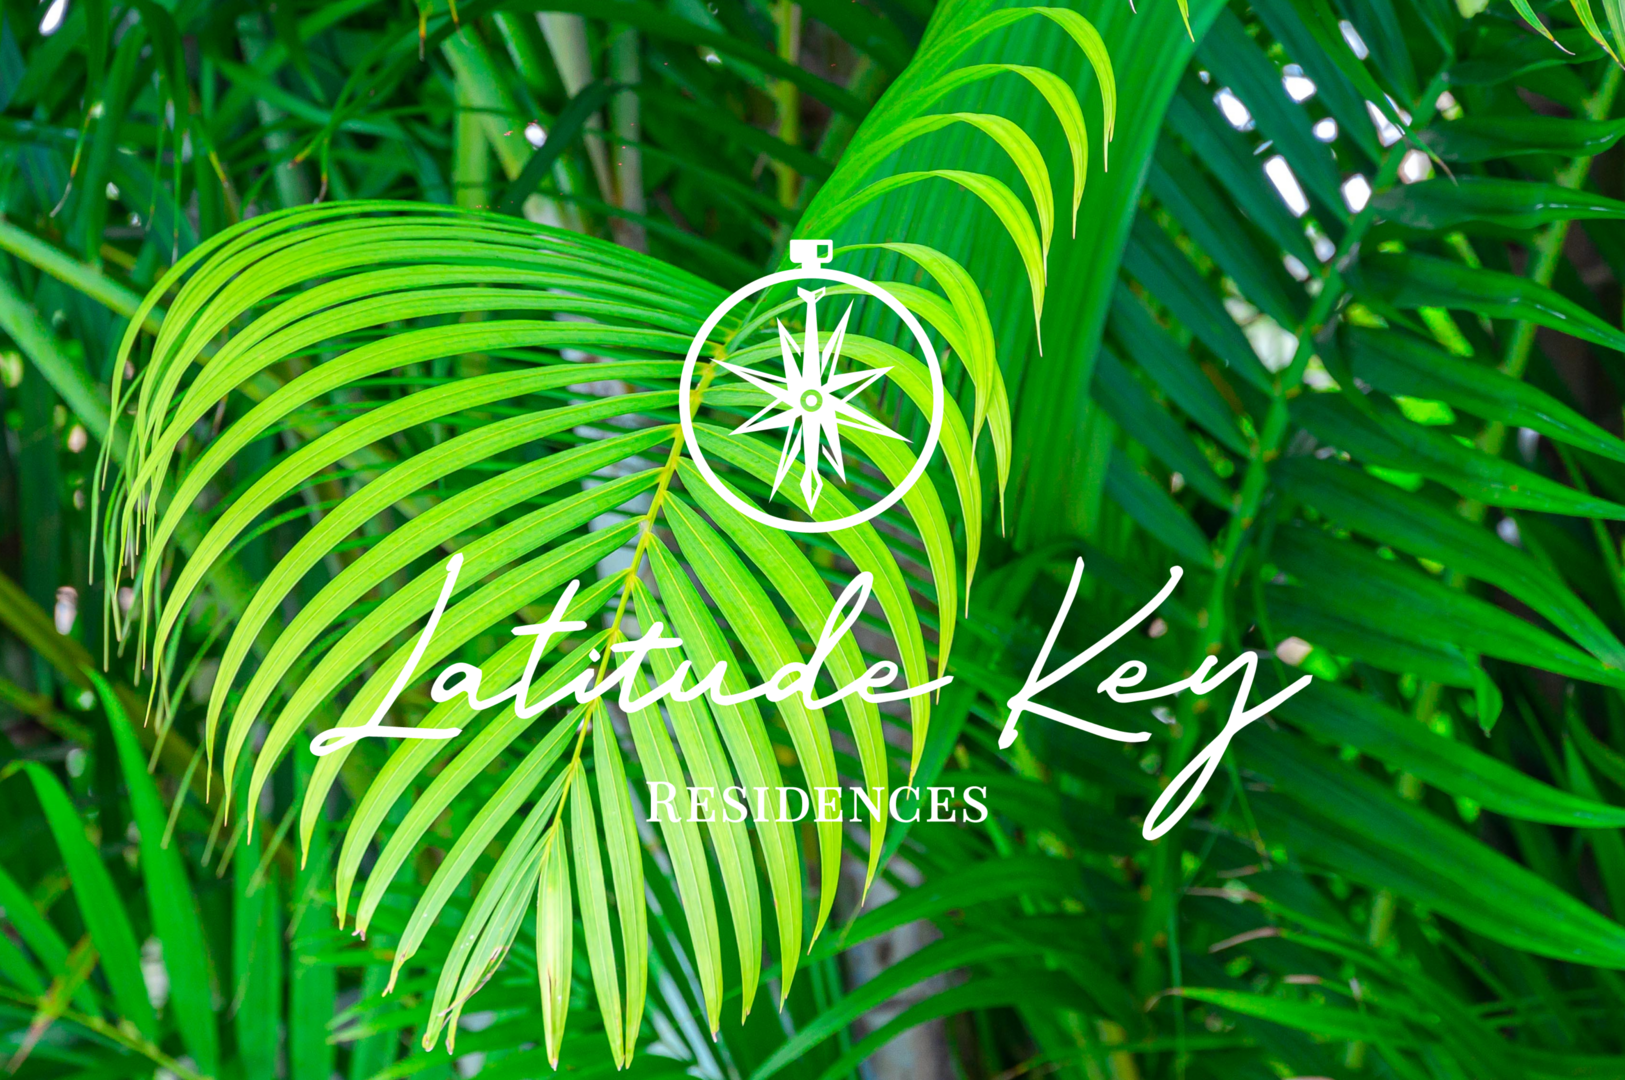 Latitude Key - Curated Vacation Properties
Enjoy a stress free holiday.